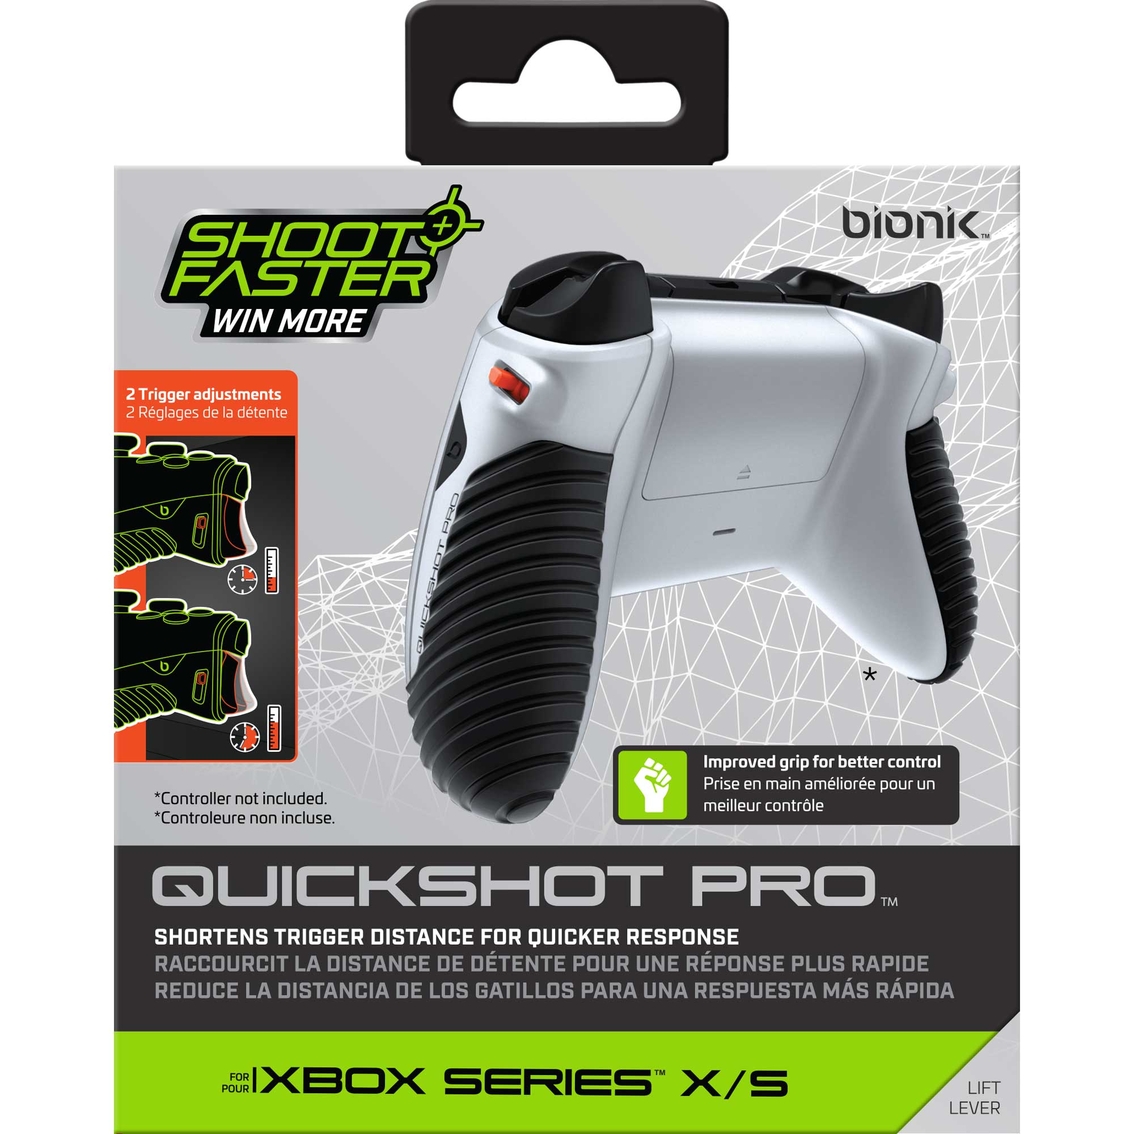 bionik Quickshot Pro for Xbox Series S/X - Image 3 of 7